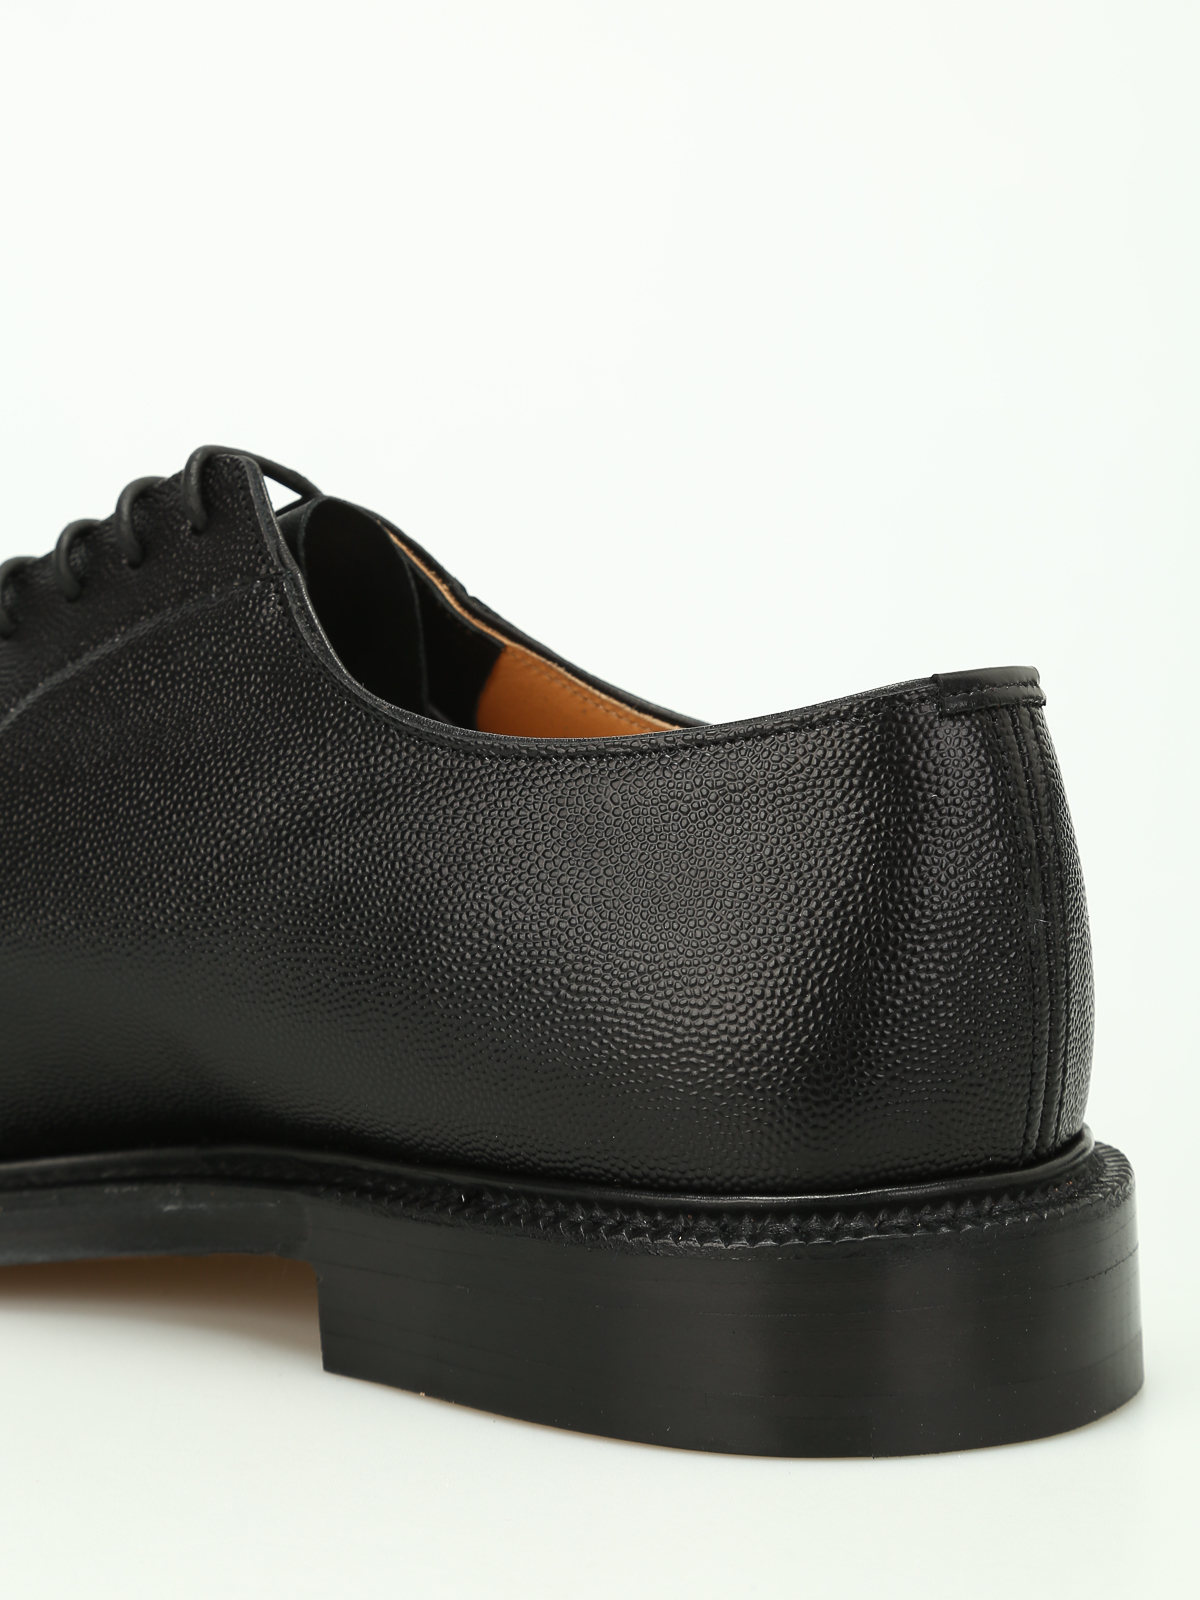 Church's - Shannon black Derby shoes 